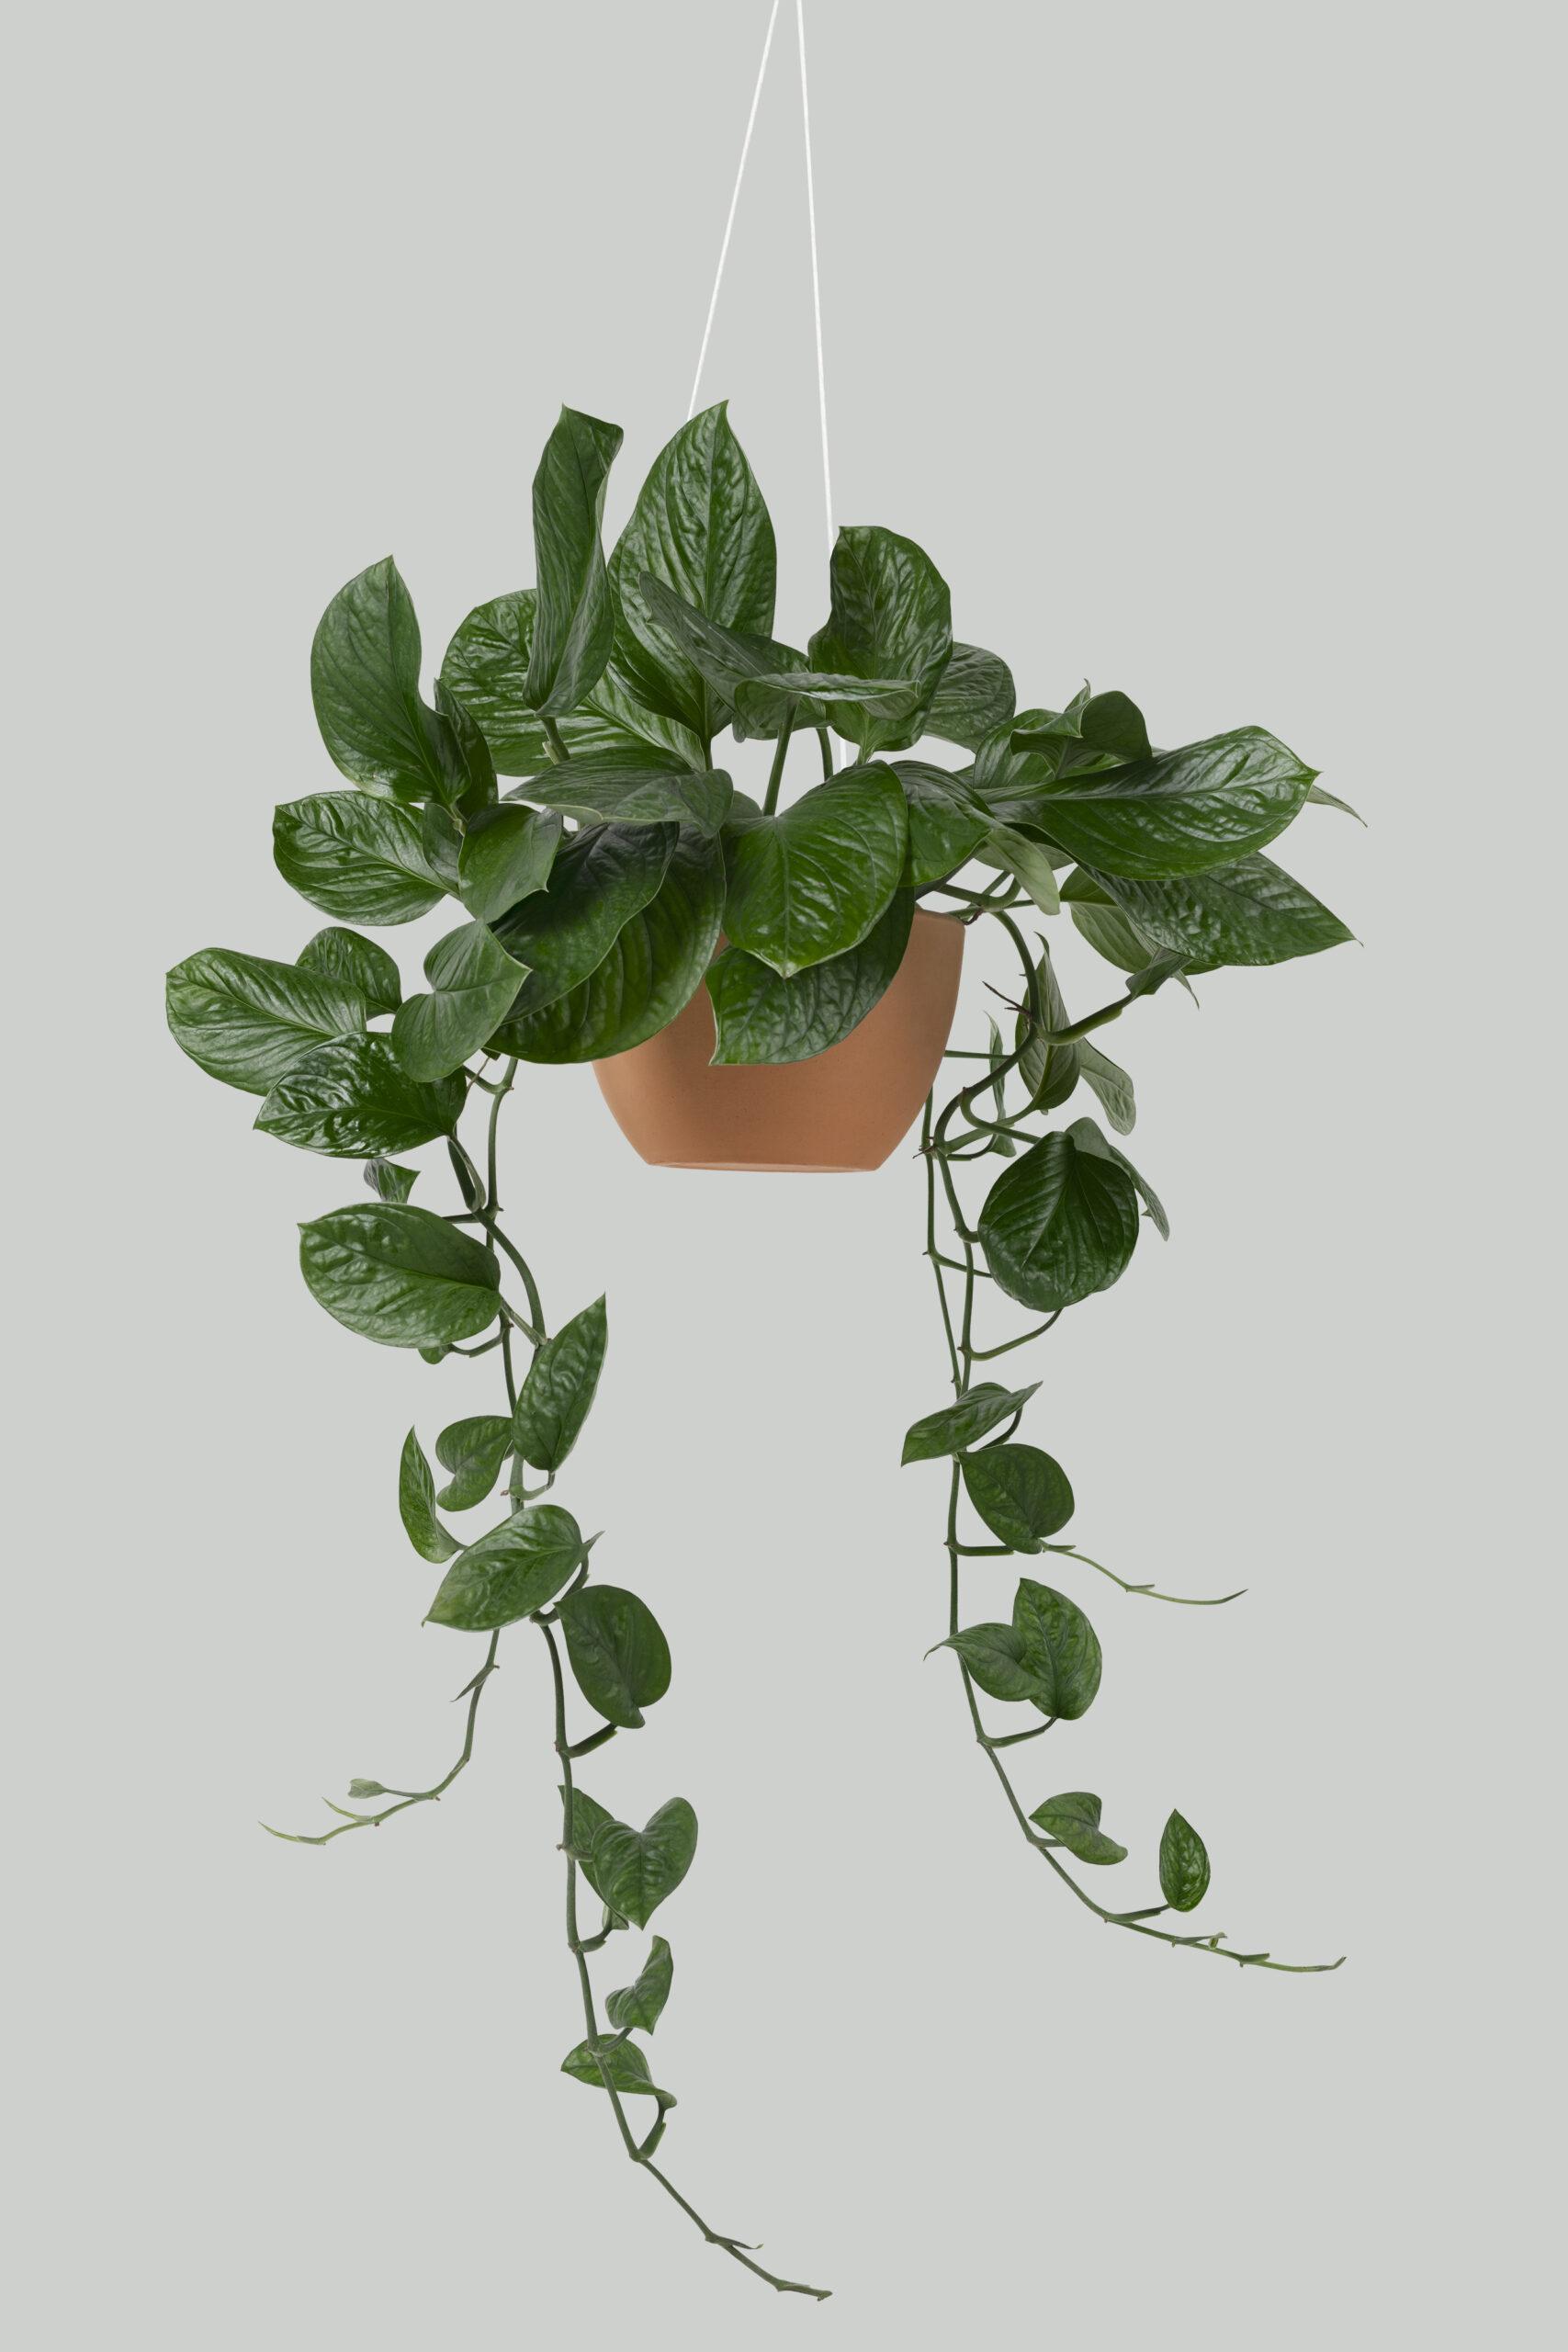 Hanging Pothos plant on gray